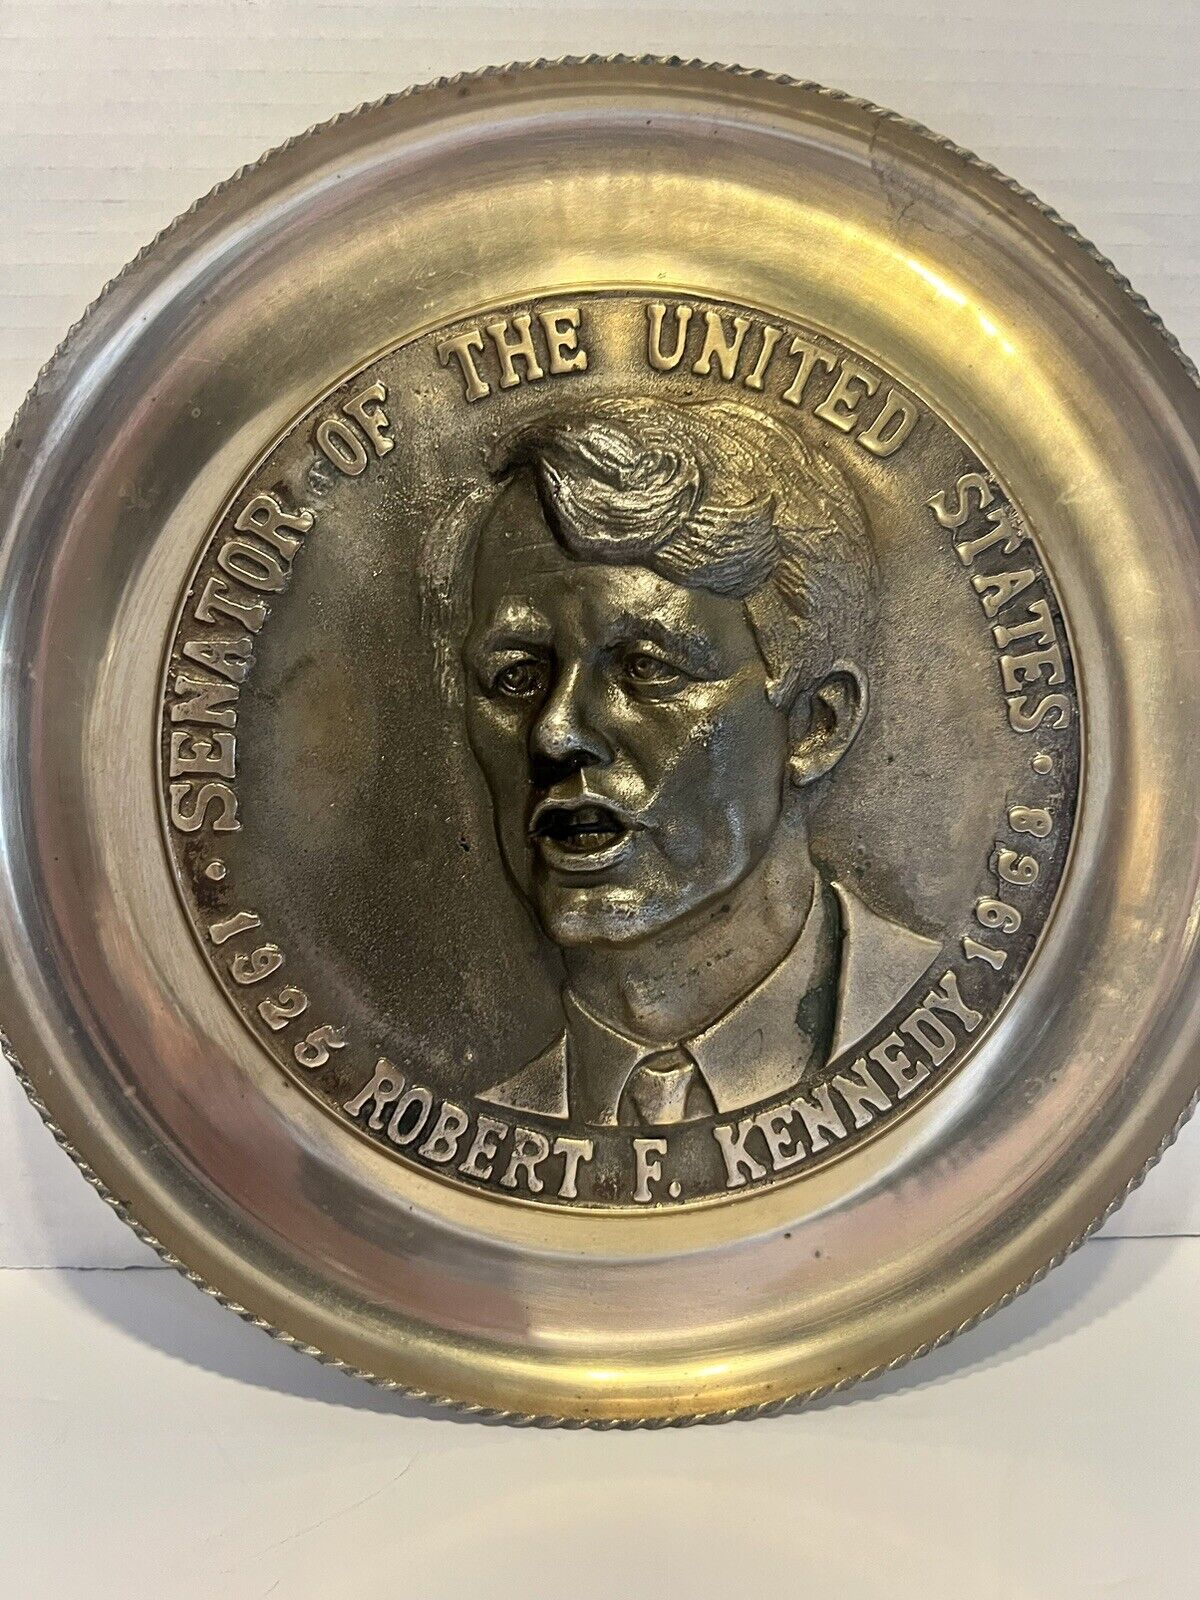 VTG Senator Robert F Kennedy Commemorative Metal Plate 3D Design 11.25” Diameter